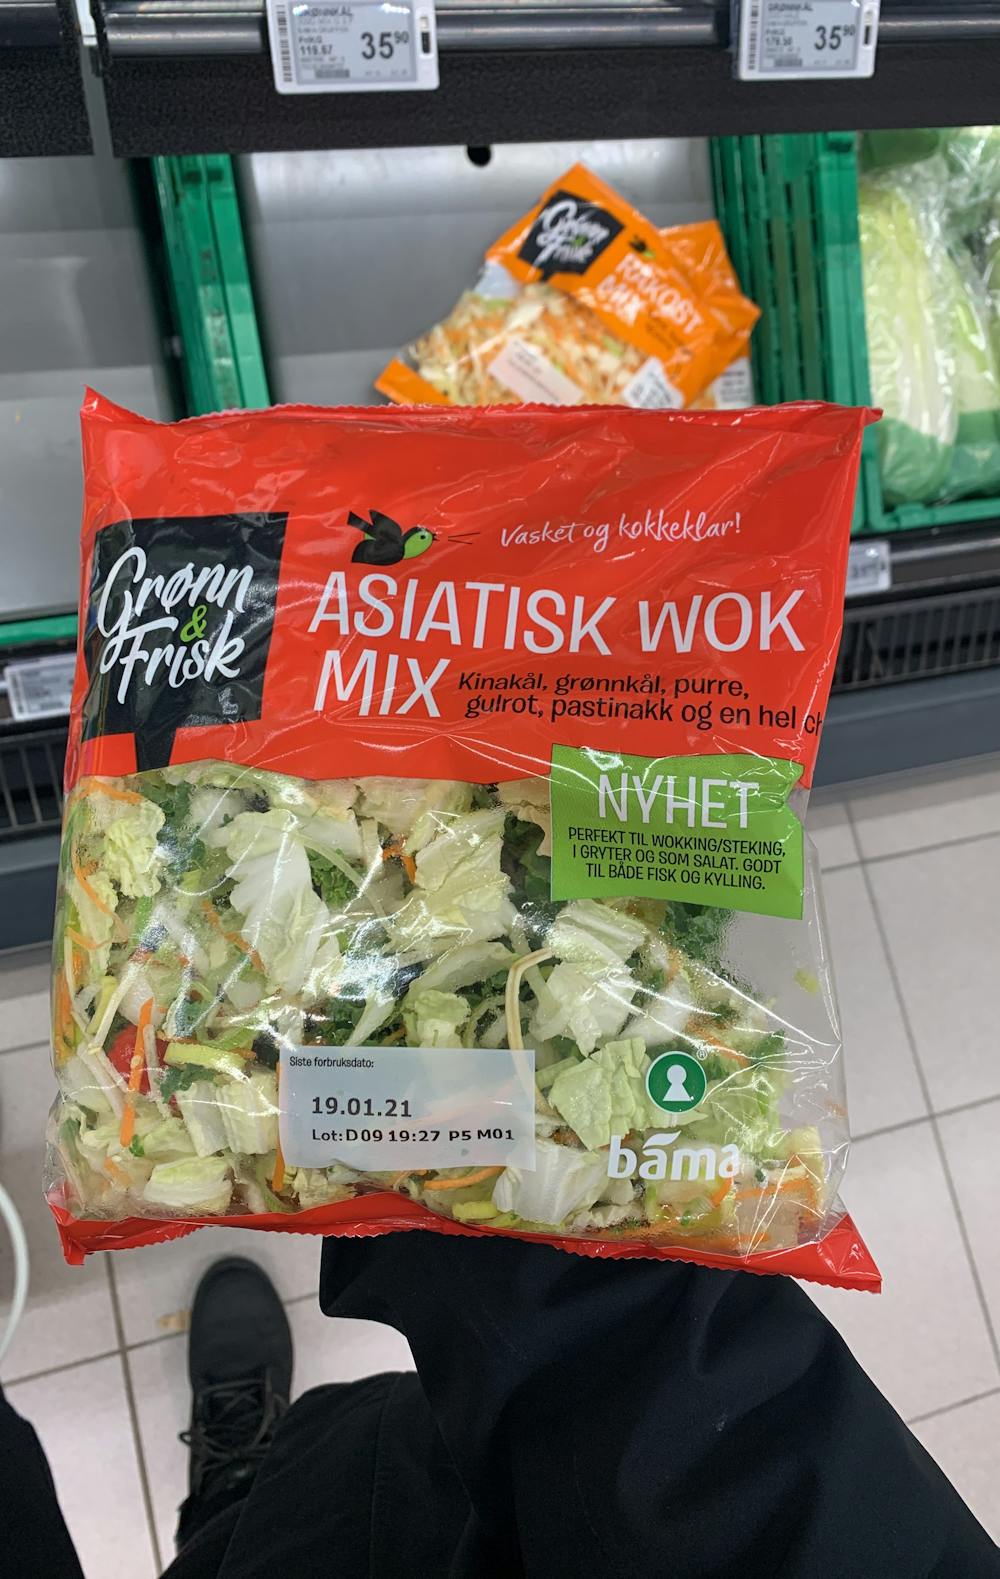 Asia wok mix, Grønn & Frisk